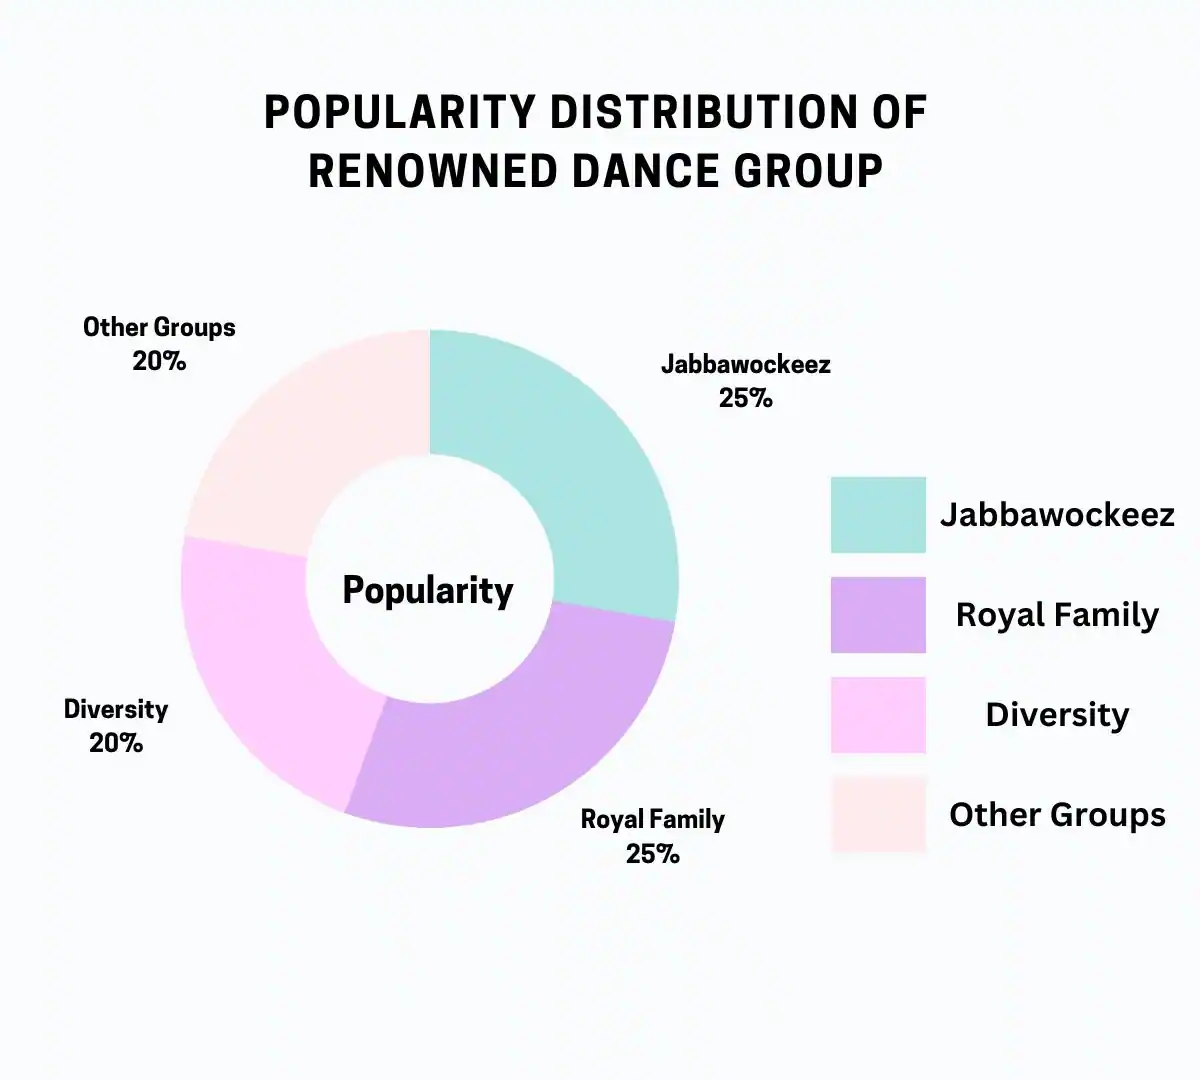 dance group names